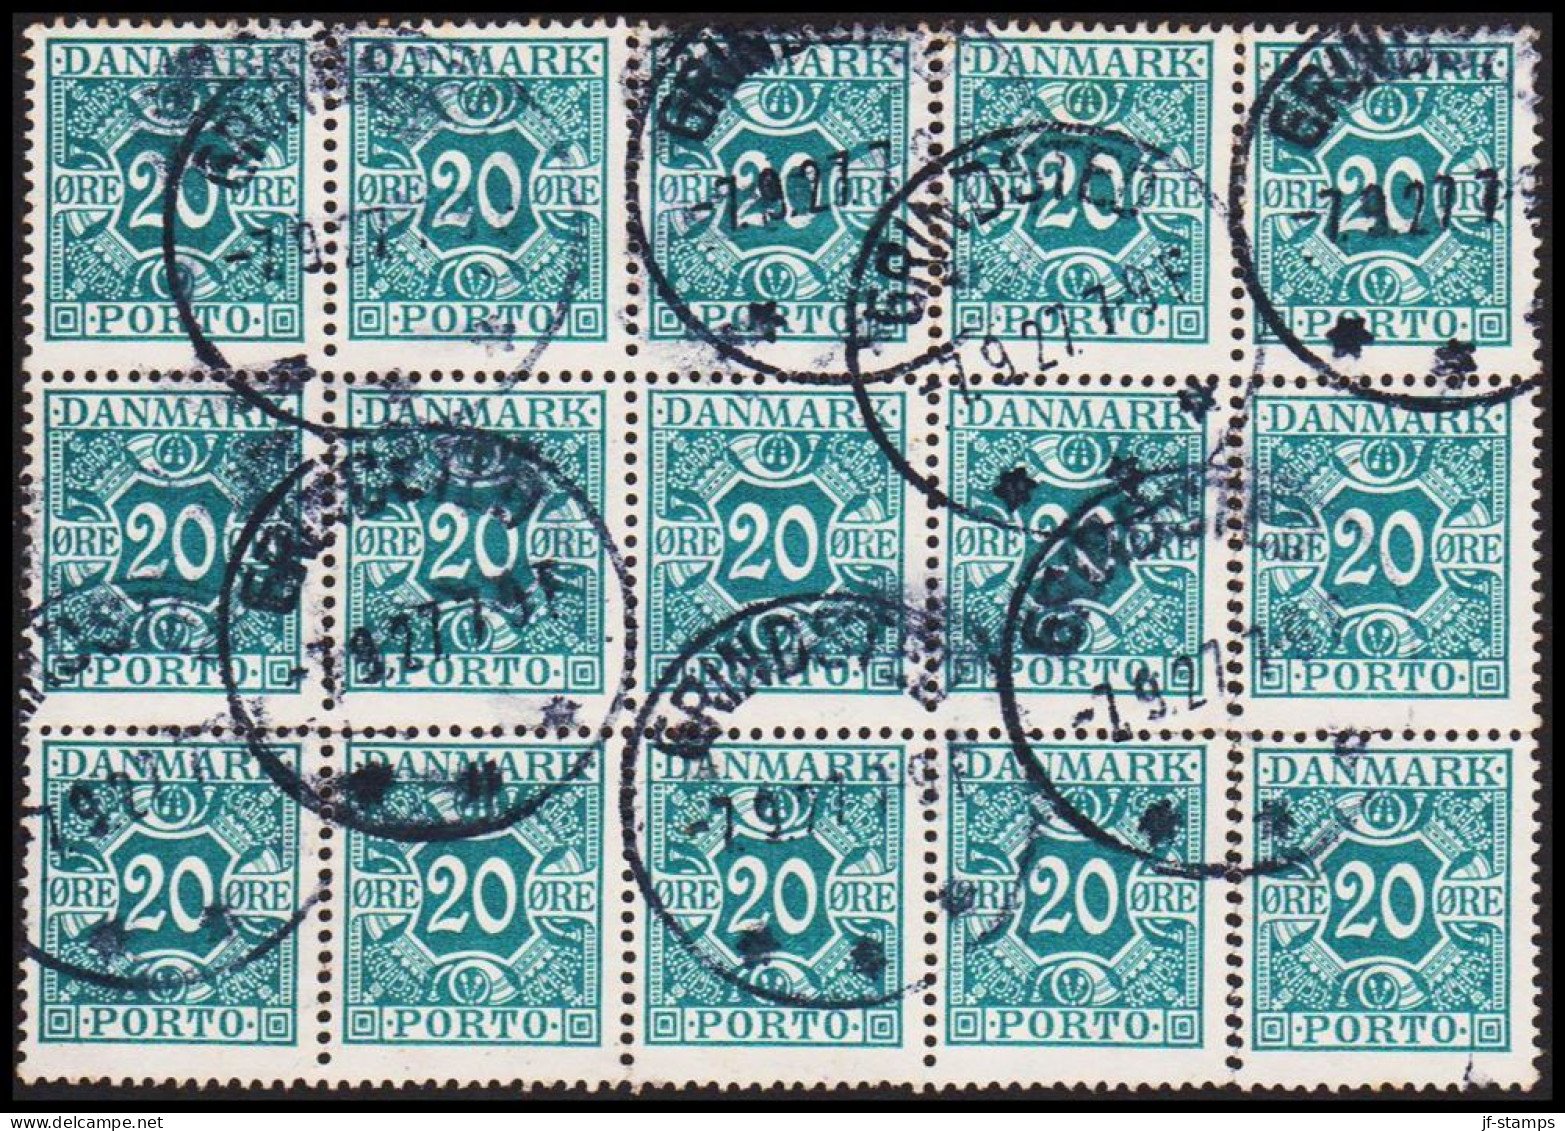 1924. DANMARK. Postage Due. Porto. 20 Øre Blue In 15block Cancelled GRINDSTED 7.9.27. Unusual... (Michel P14) - JF545143 - Portomarken